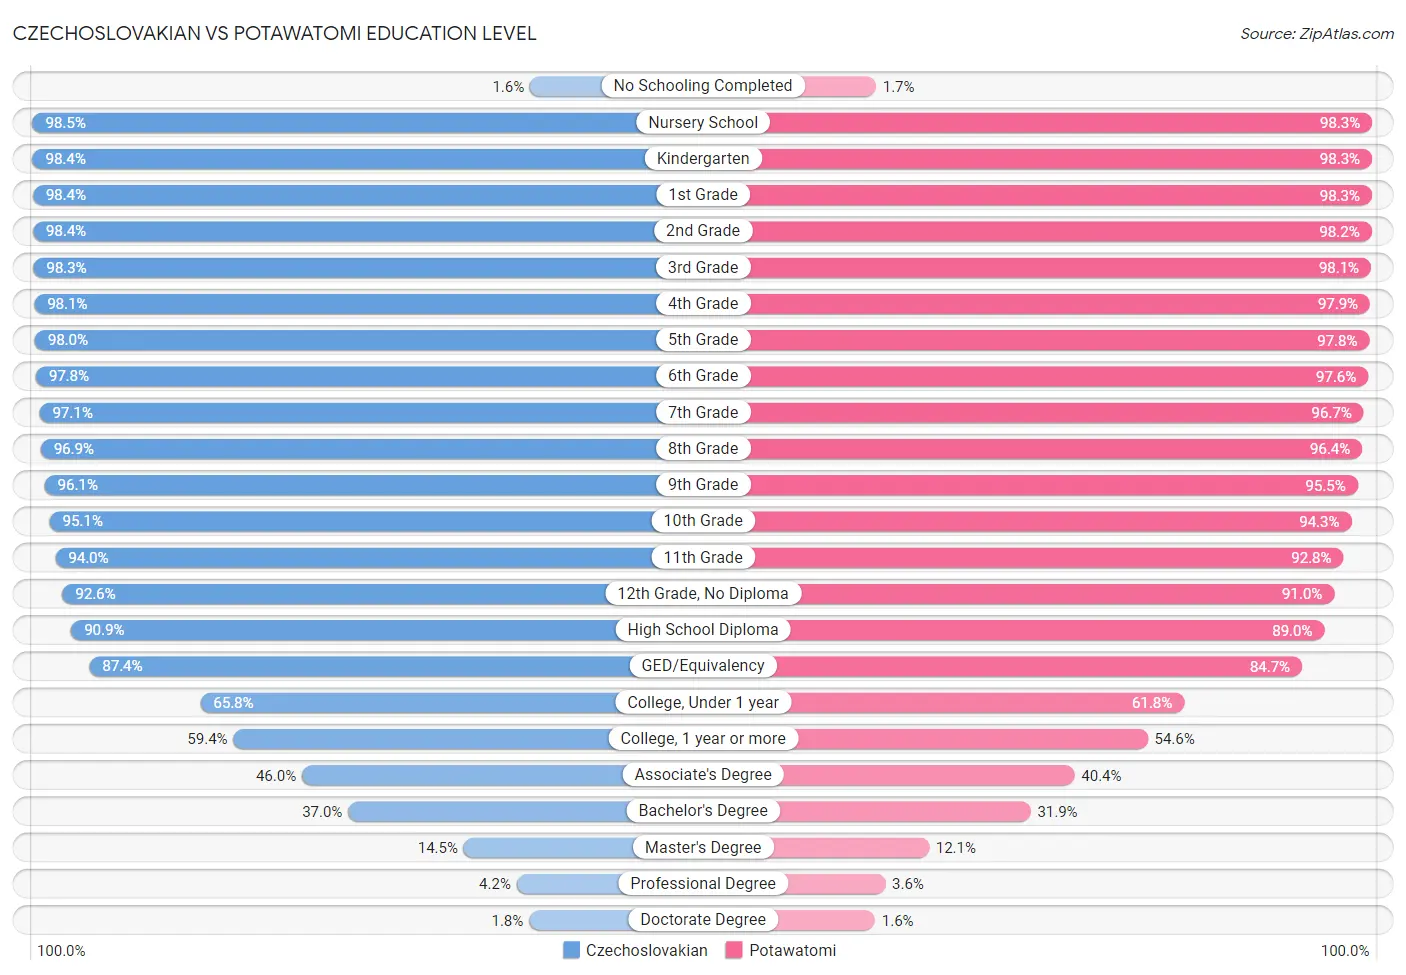 Czechoslovakian vs Potawatomi Education Level